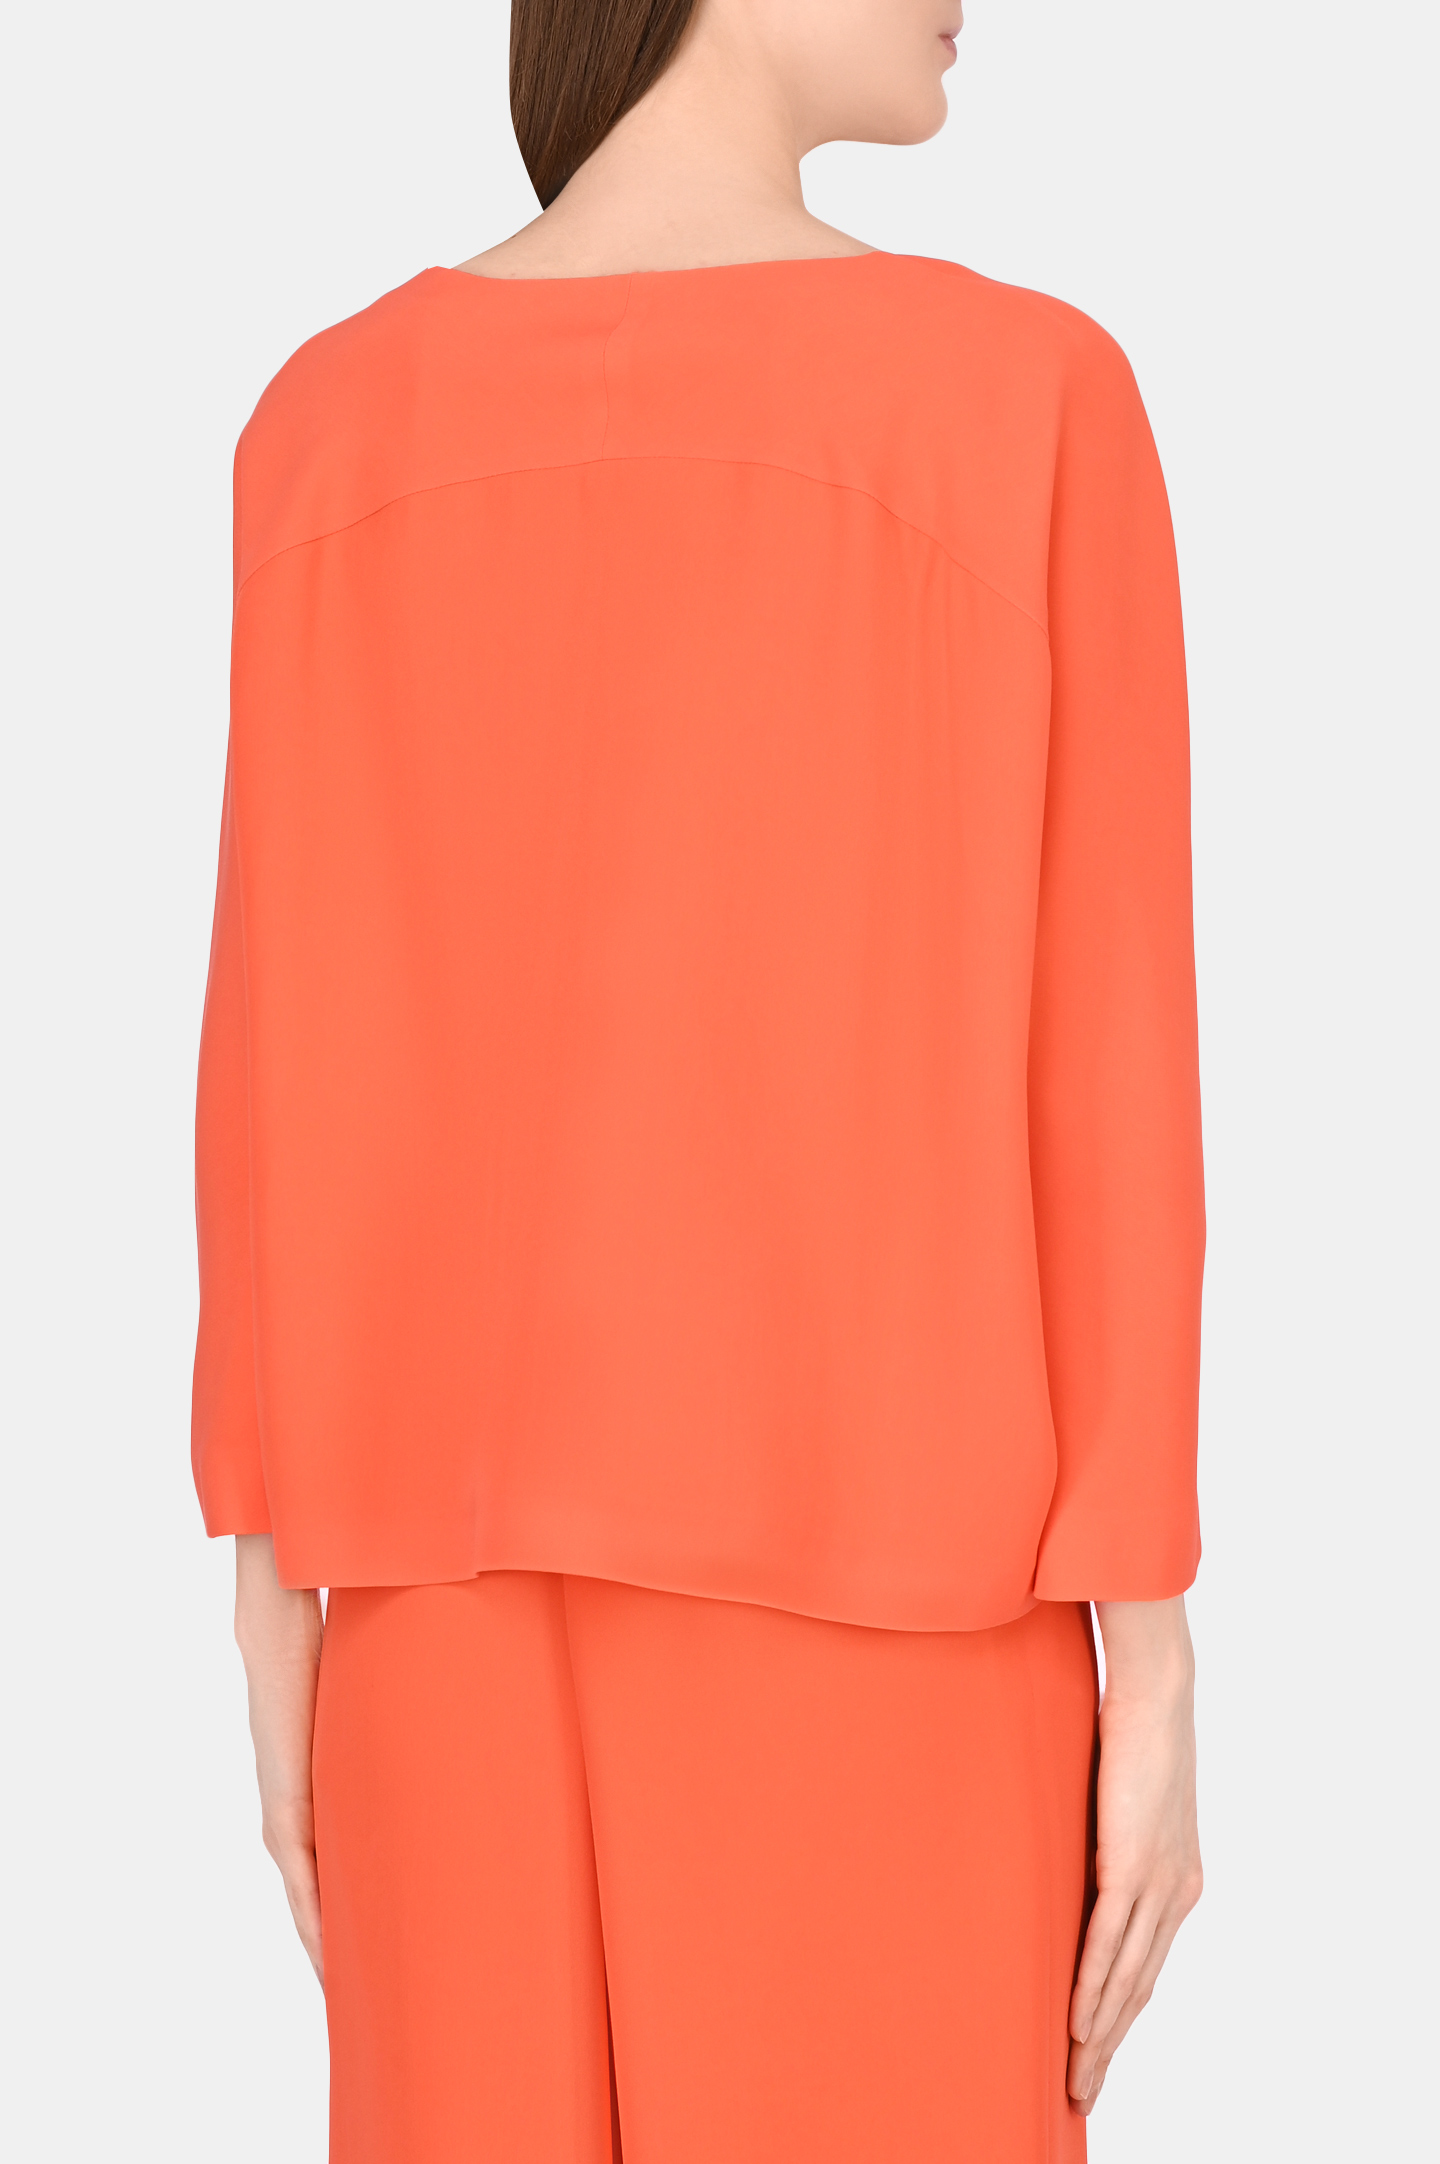 Блуза VALENTINO PAP XB3AE2B51MM, цвет: Оранжевый, Женский